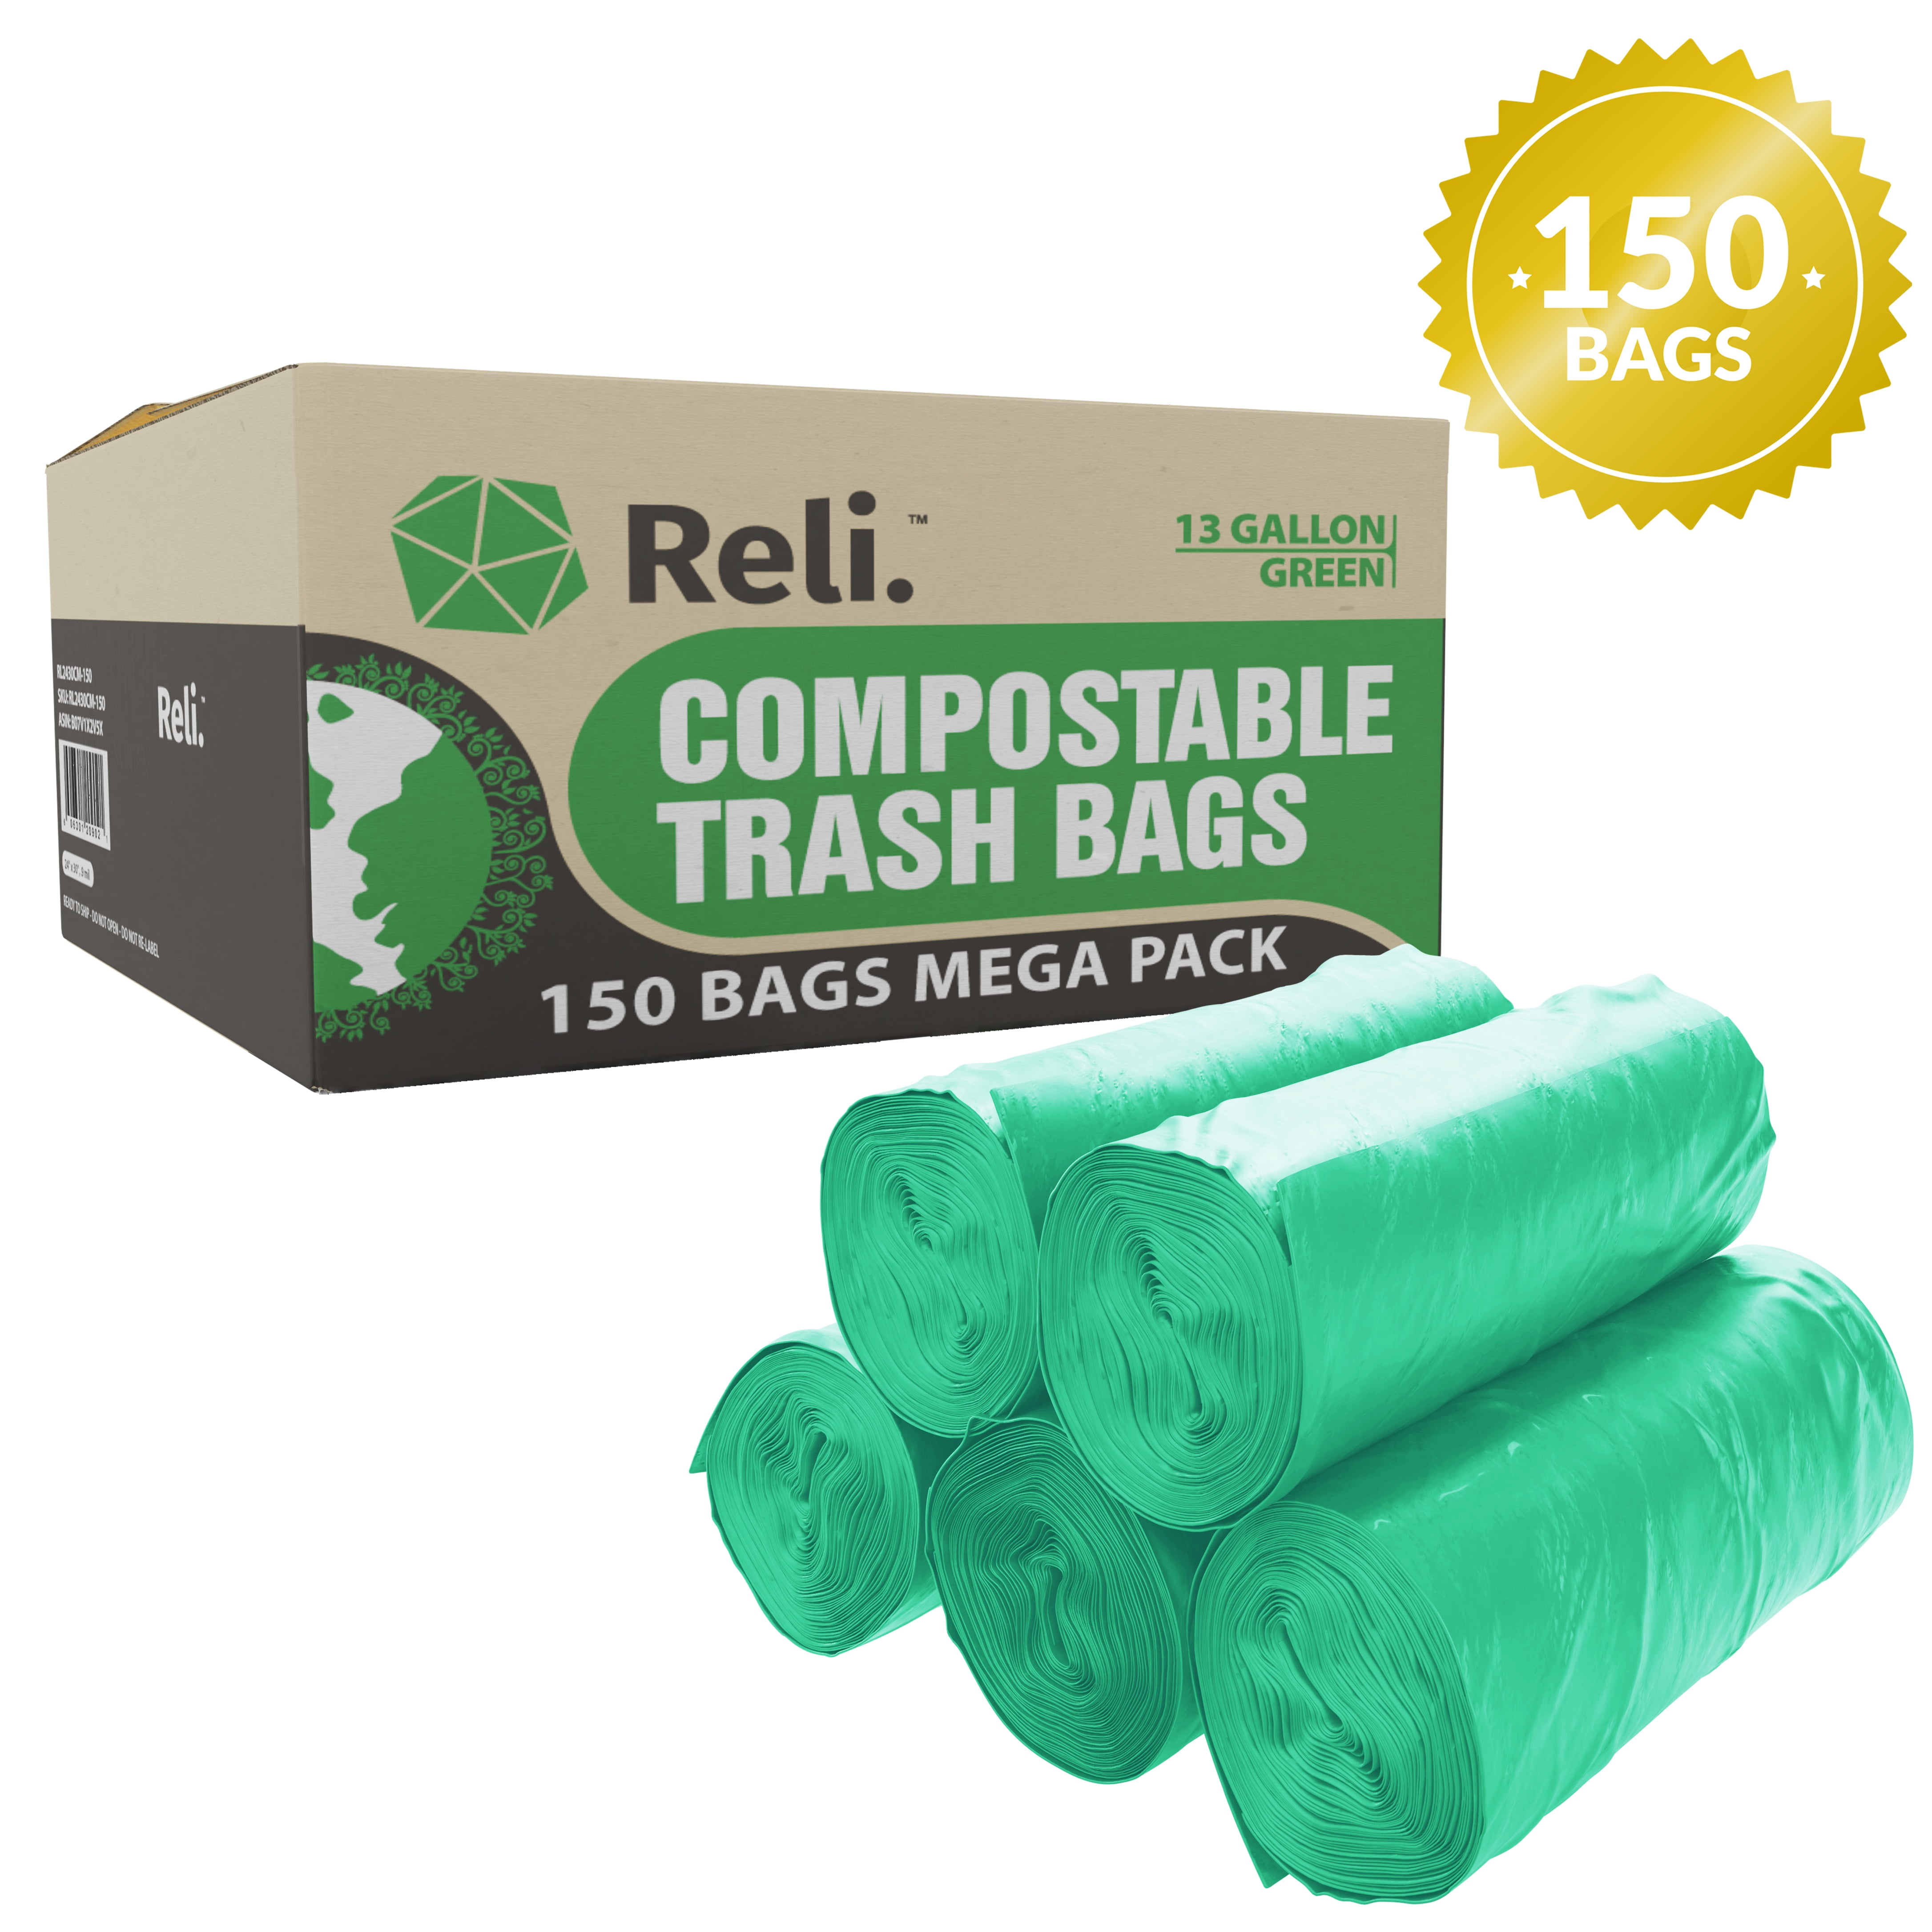 13 gallon biodegradable trash bags, Certified